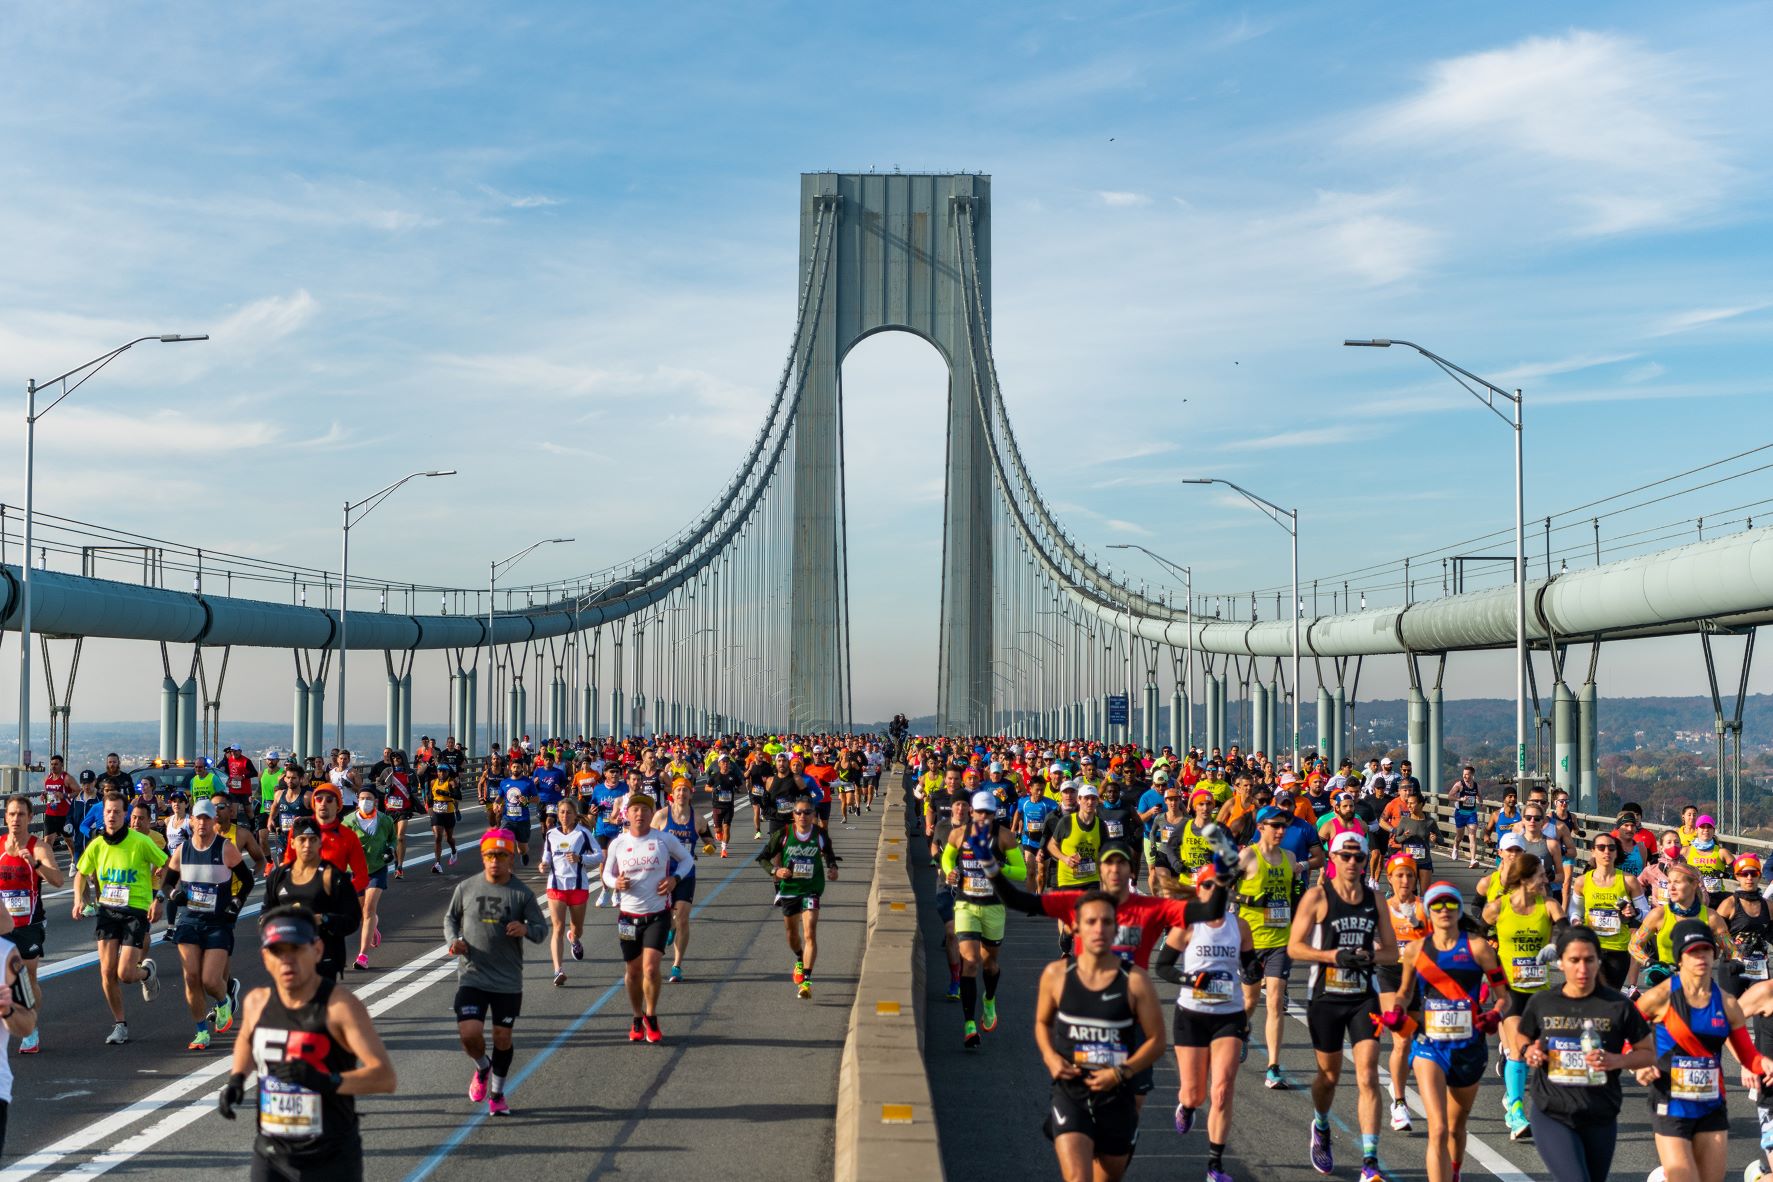 Marathon de New York tout savoir sur dossard, voyage, avis et infos